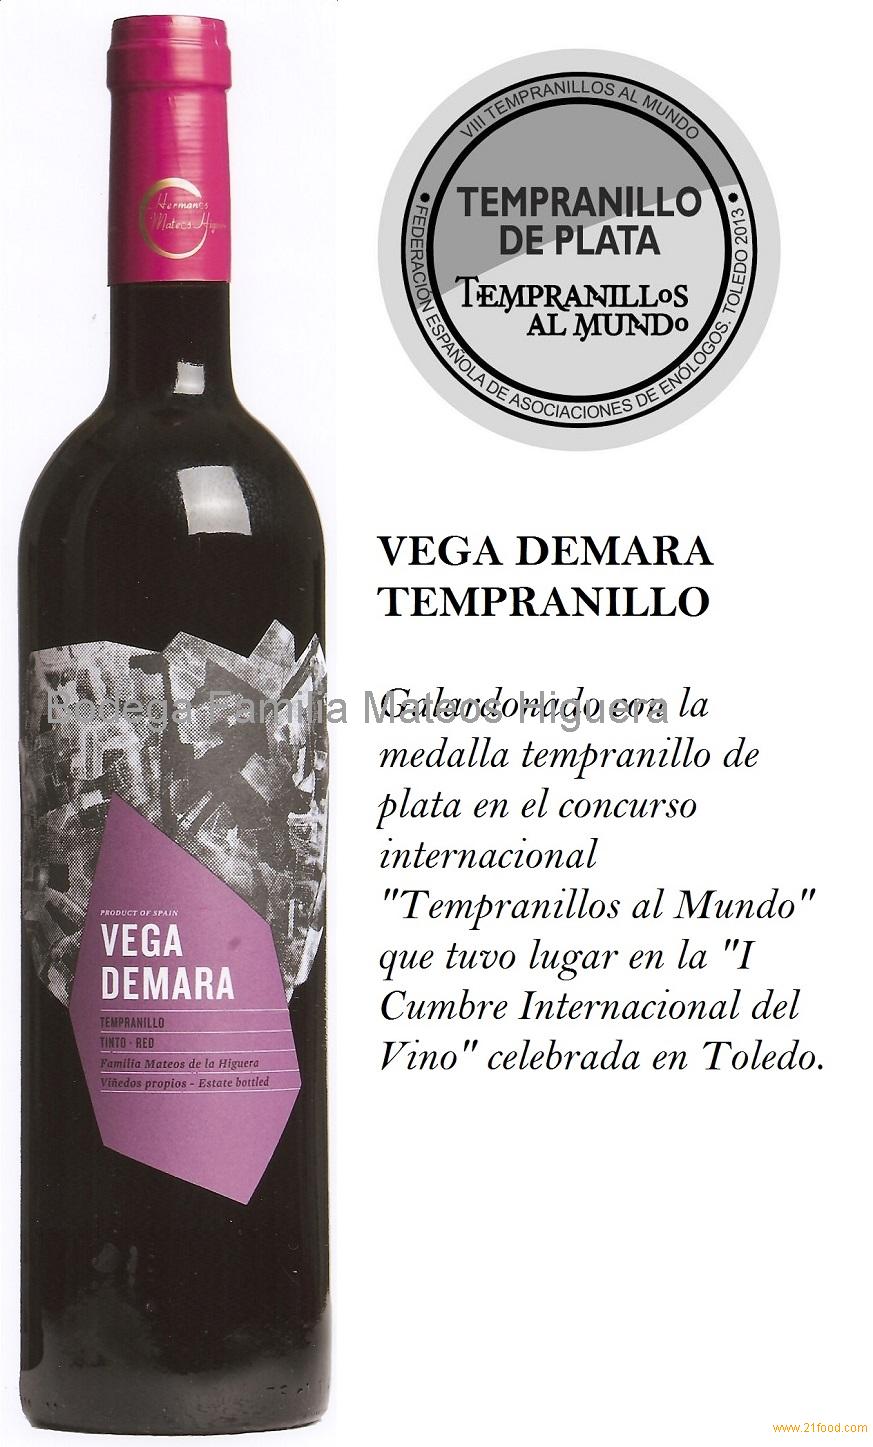 Vega Demara Tempranillo 2013 products,Spa